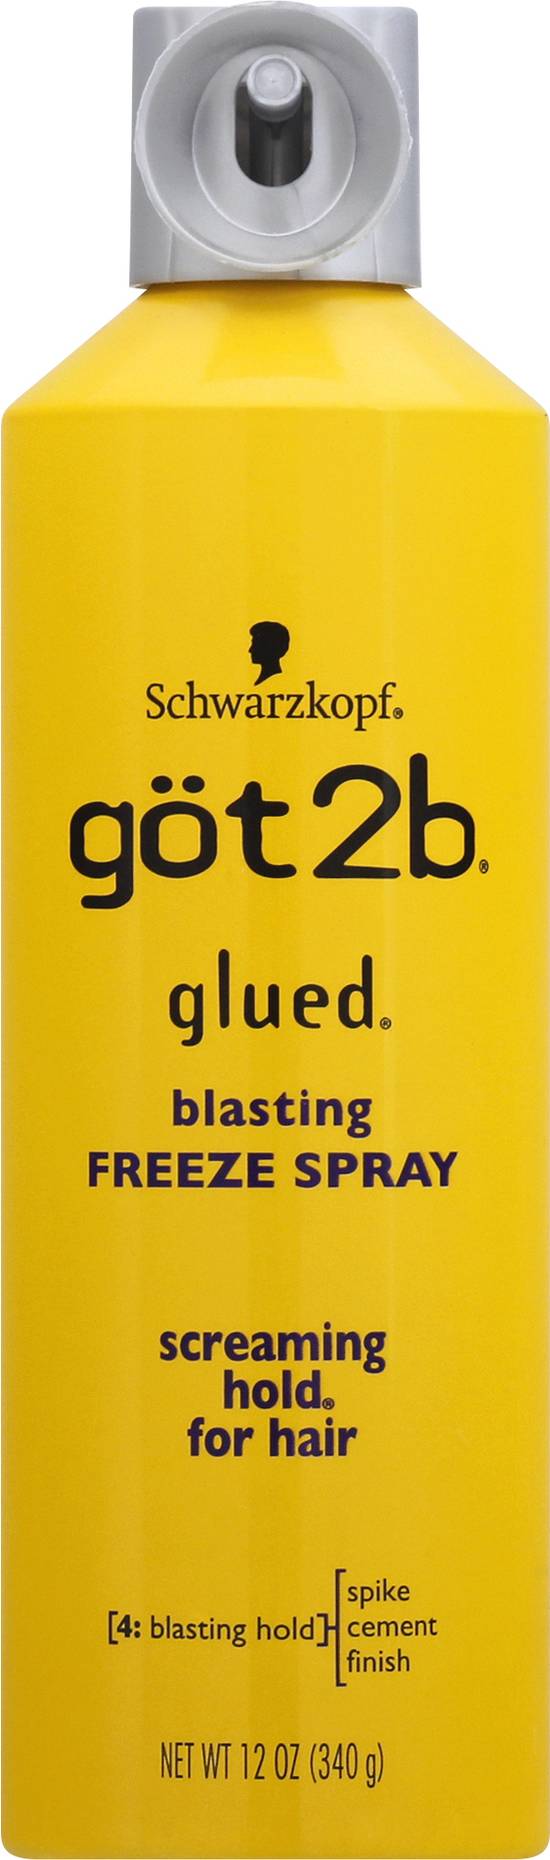 Got2b Schwarzkopf Glued Blasting Freeze Spray